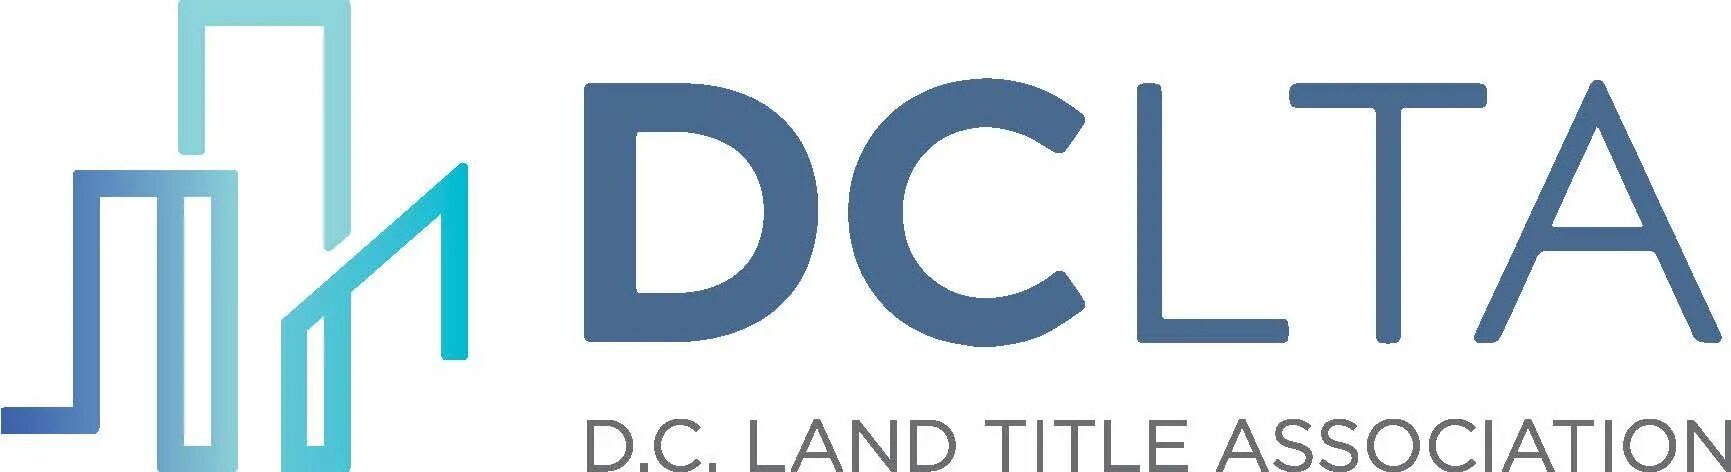 Columbia Land. District of Columbia. Snoaboard Association. Fiduciary Trust Company International logo. Found associates